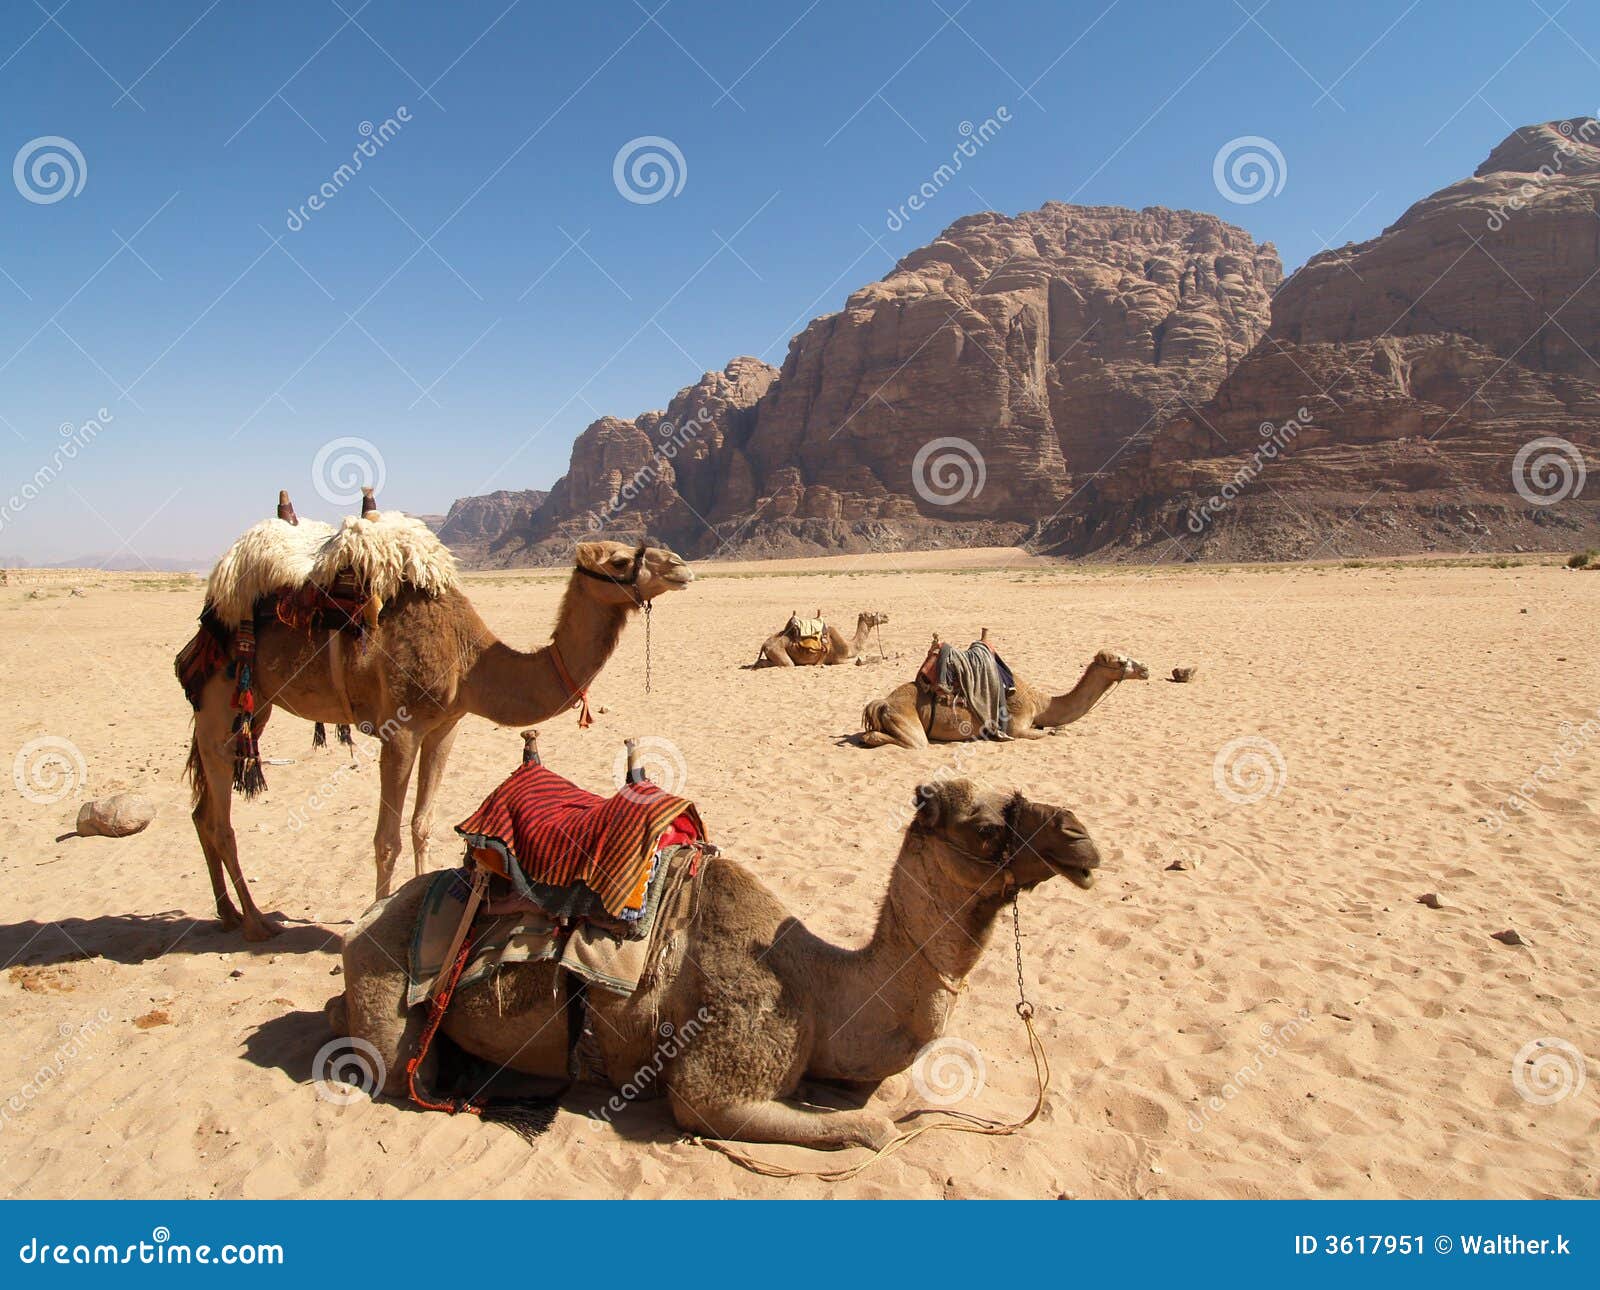 camels on the desert